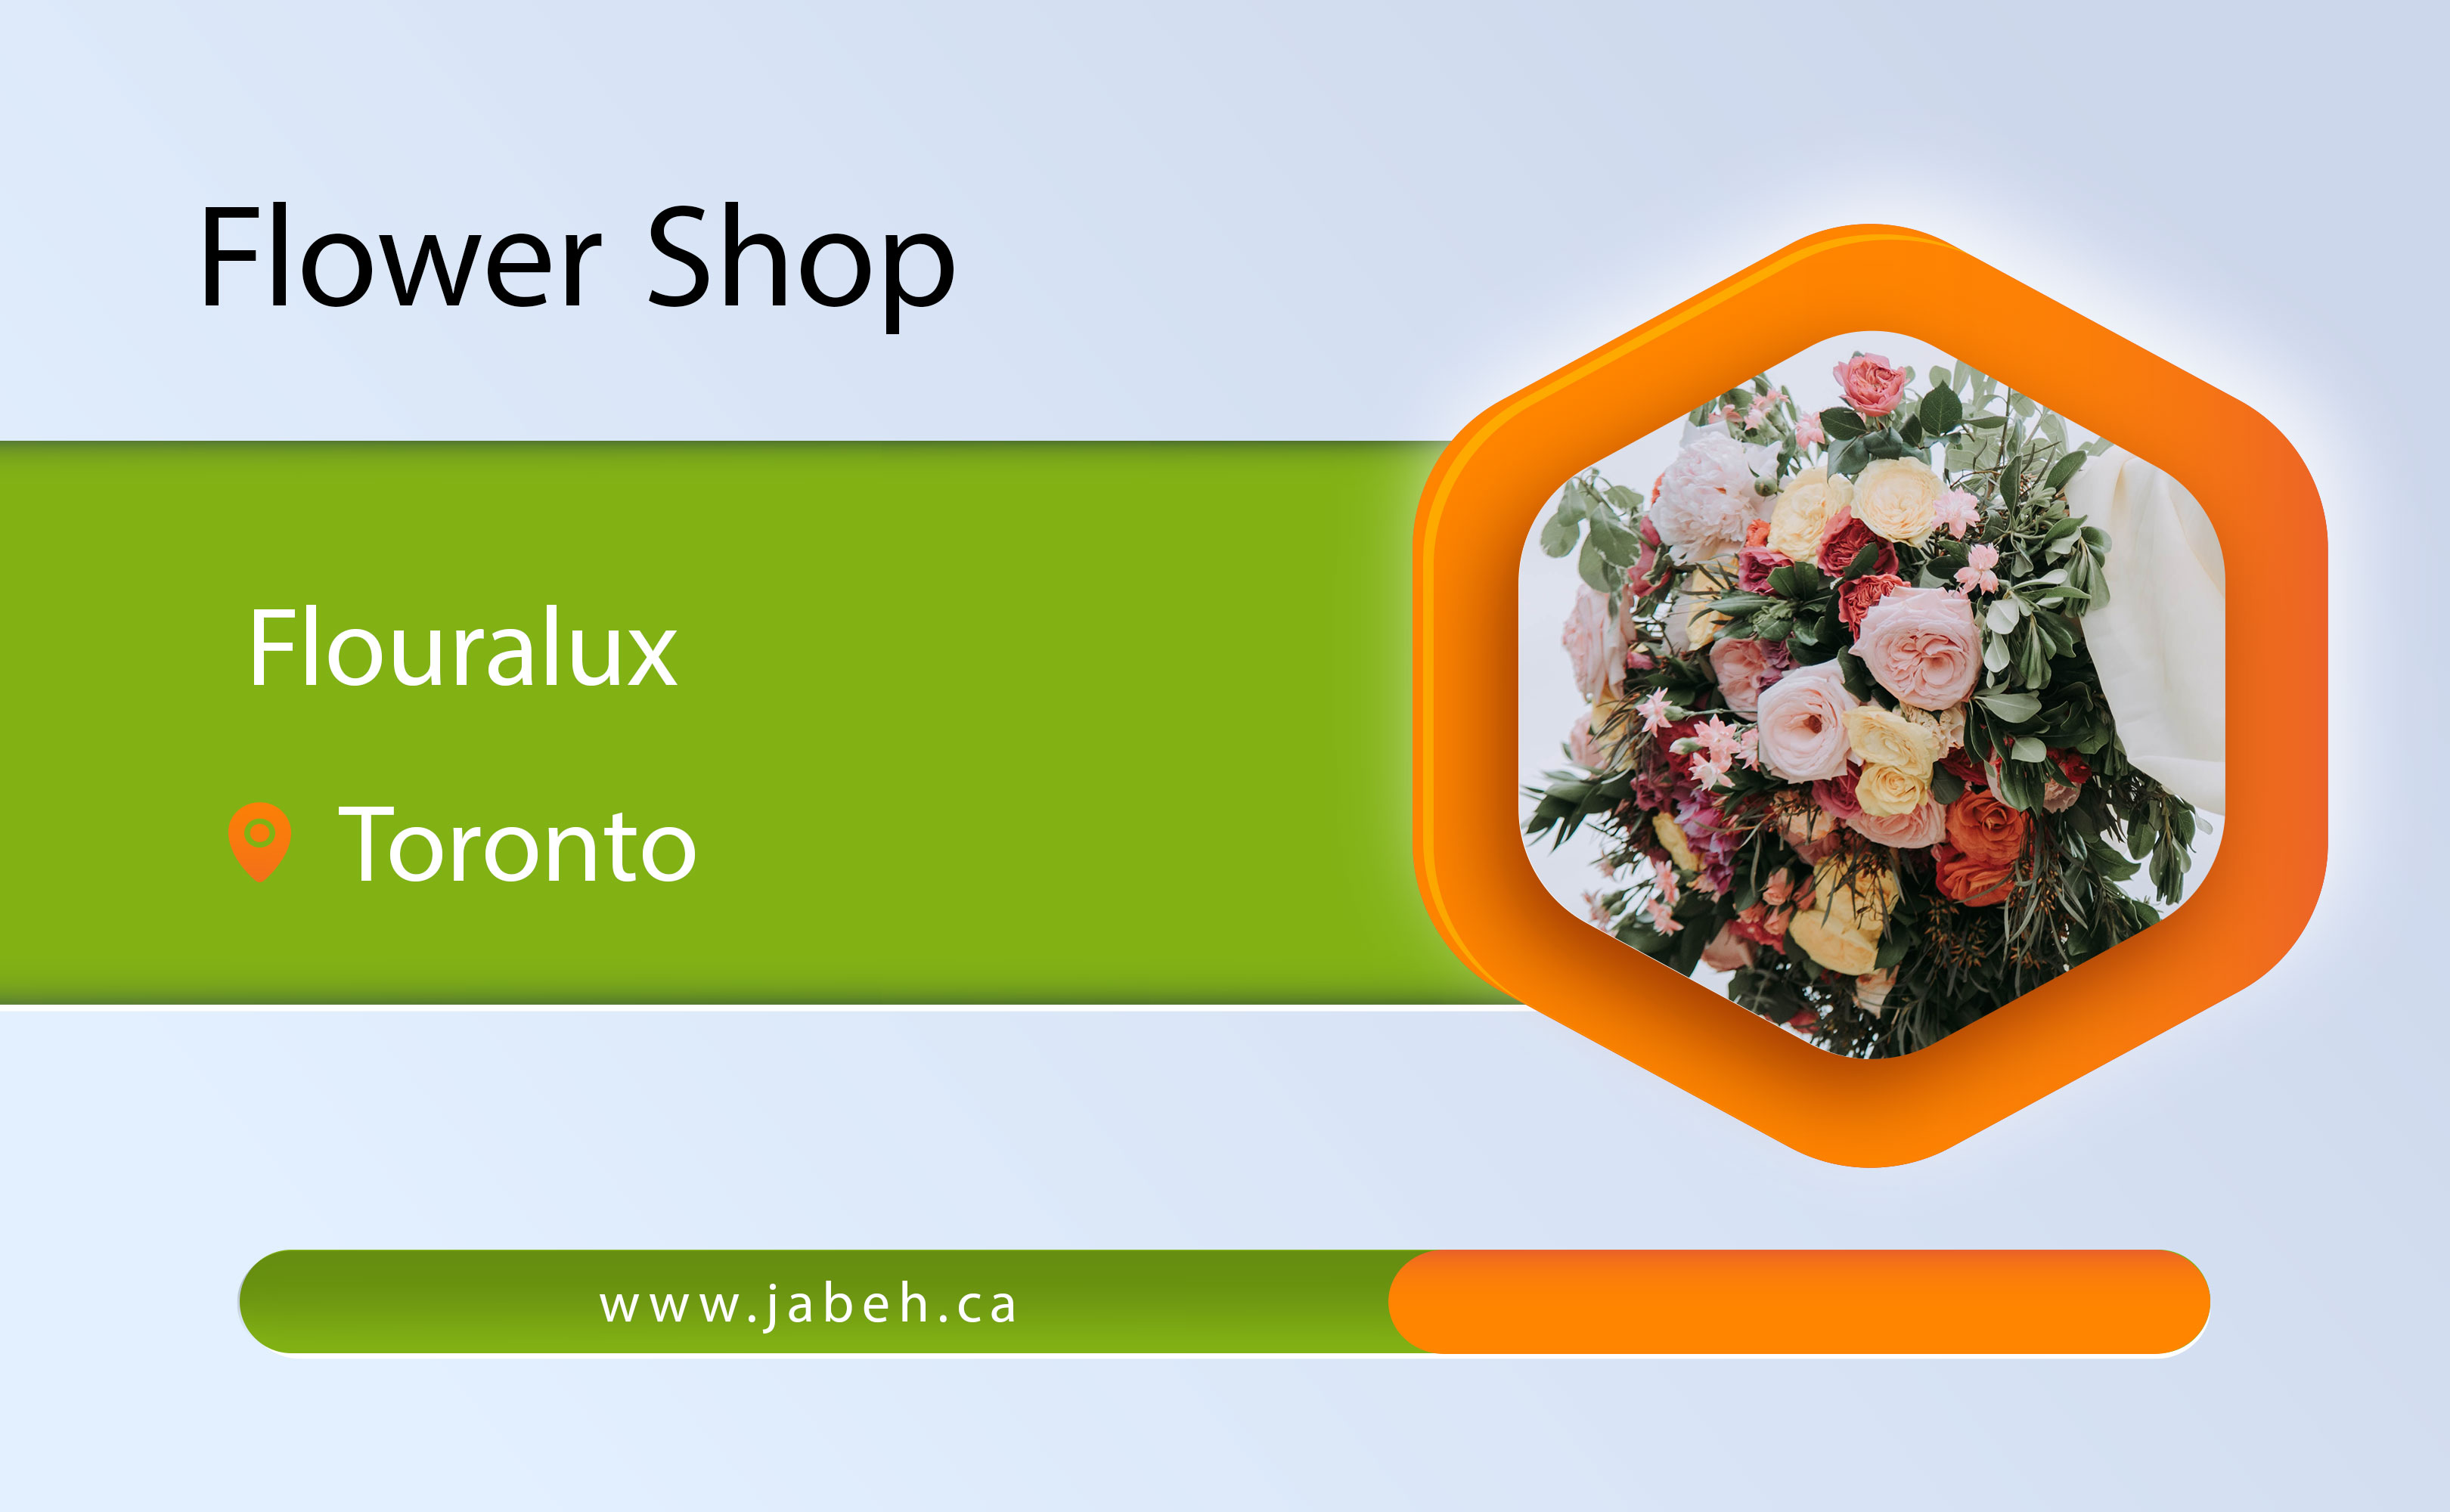 Flouralux flower shop in Toronto